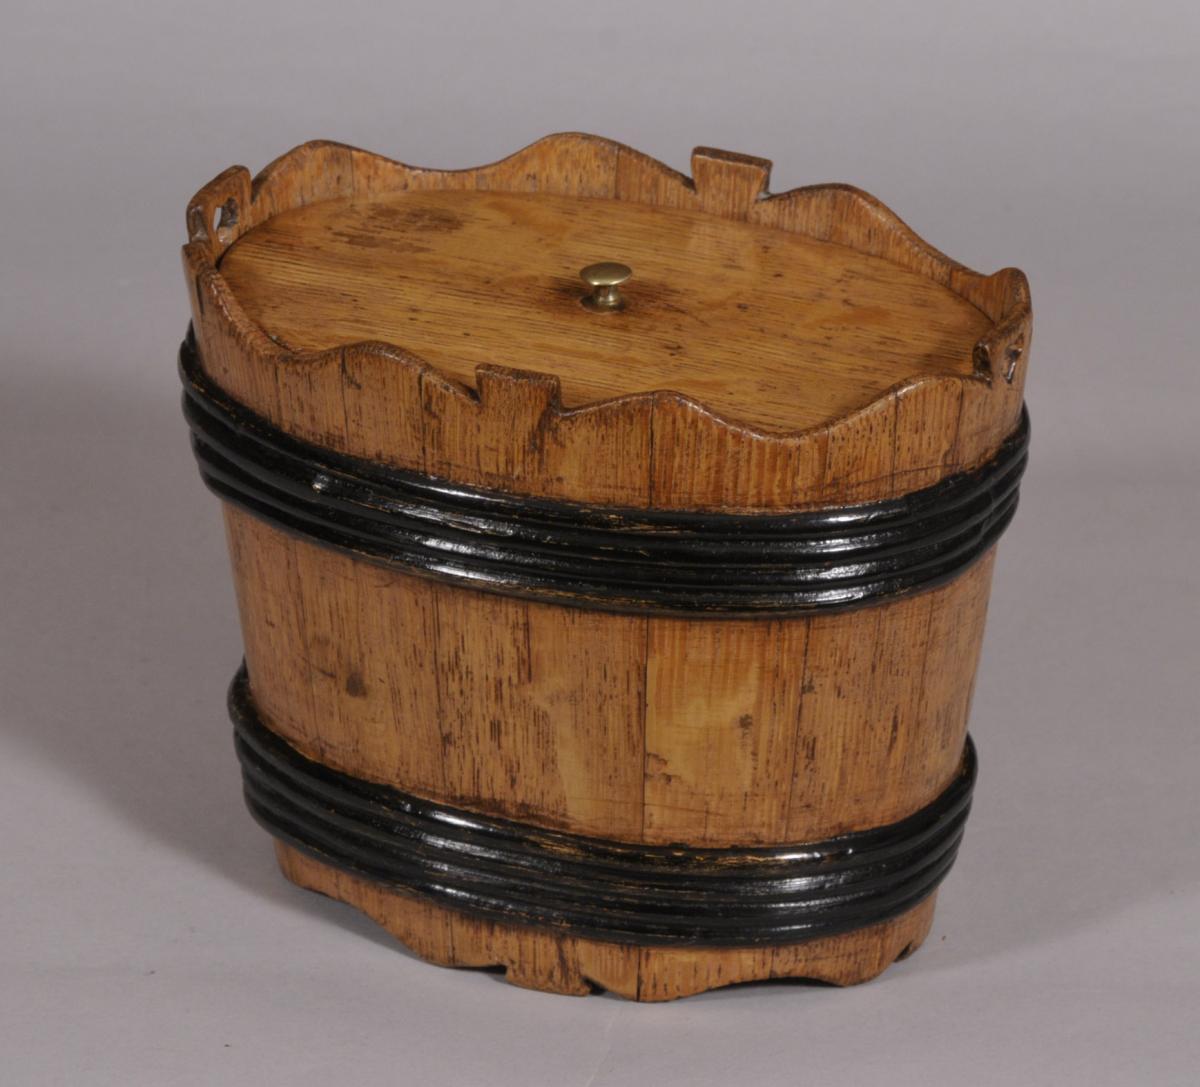 S/4481 Antique Treen 19th Century Blond Ash Biscuit Barrel